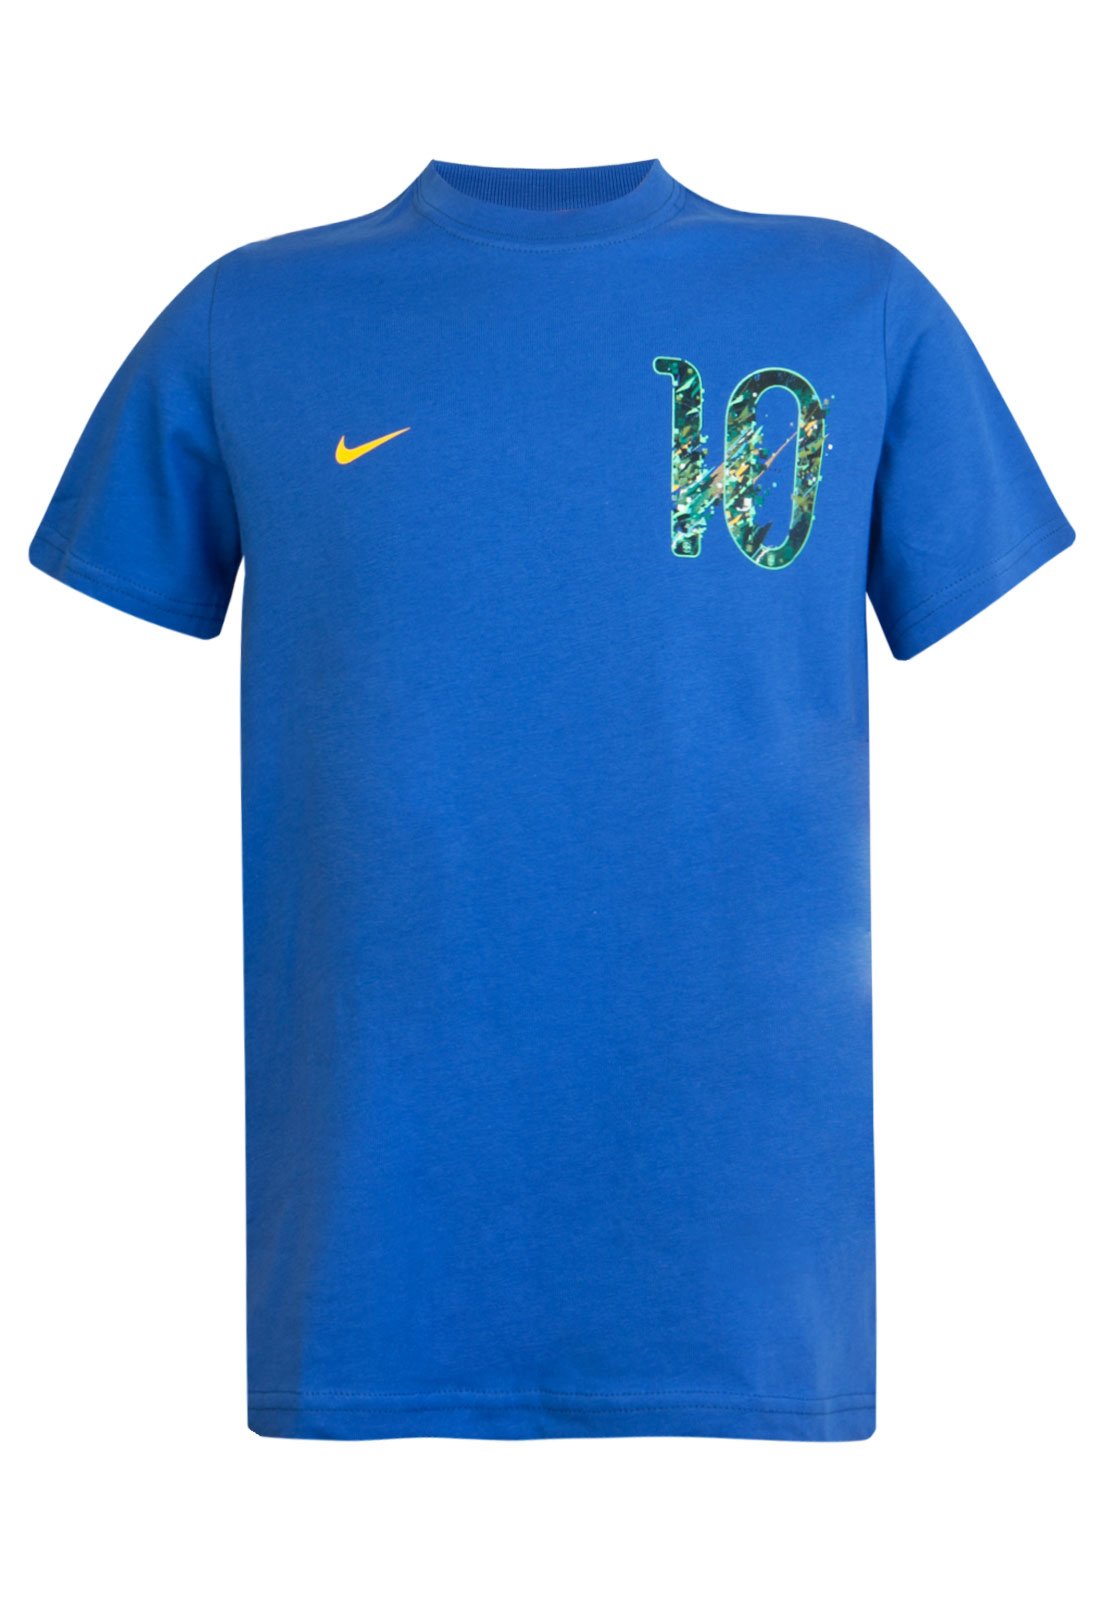 Camiseta Nike Neymar - Compre Agora | Dafiti Brasil